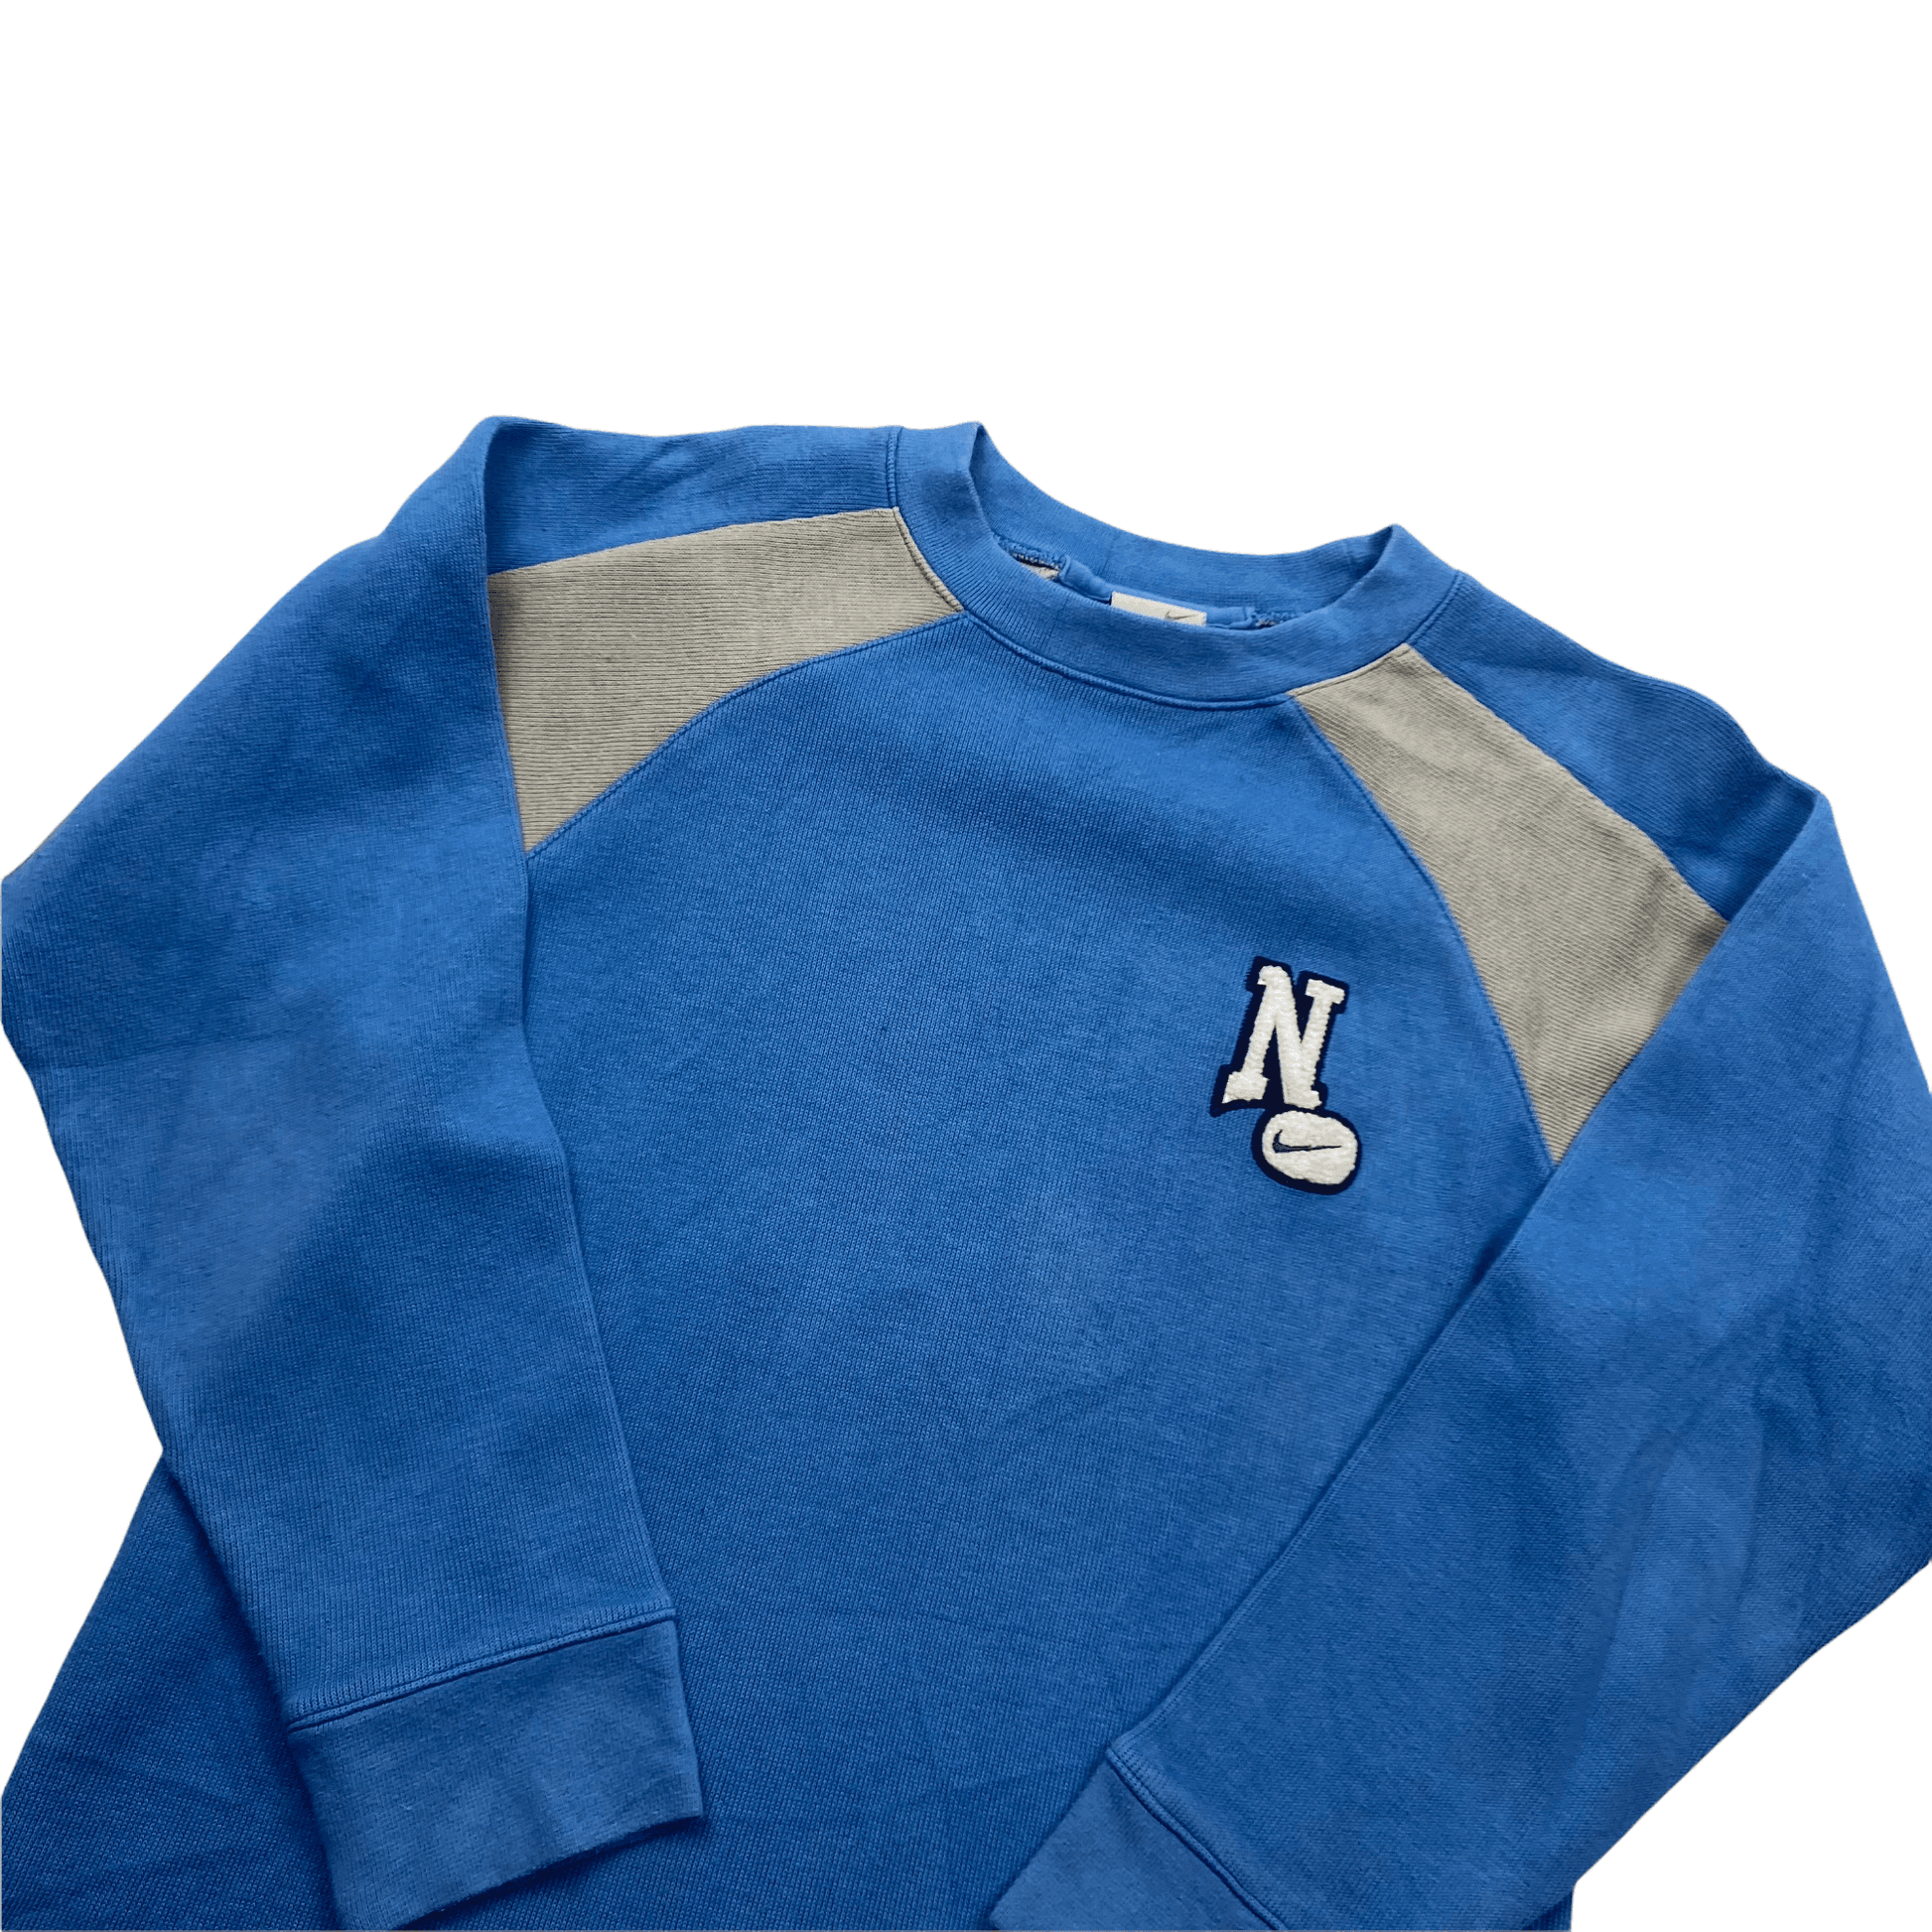 Vintage Women's Baby Blue + Grey Nike Sweatshirt - Large - The Streetwear Studio